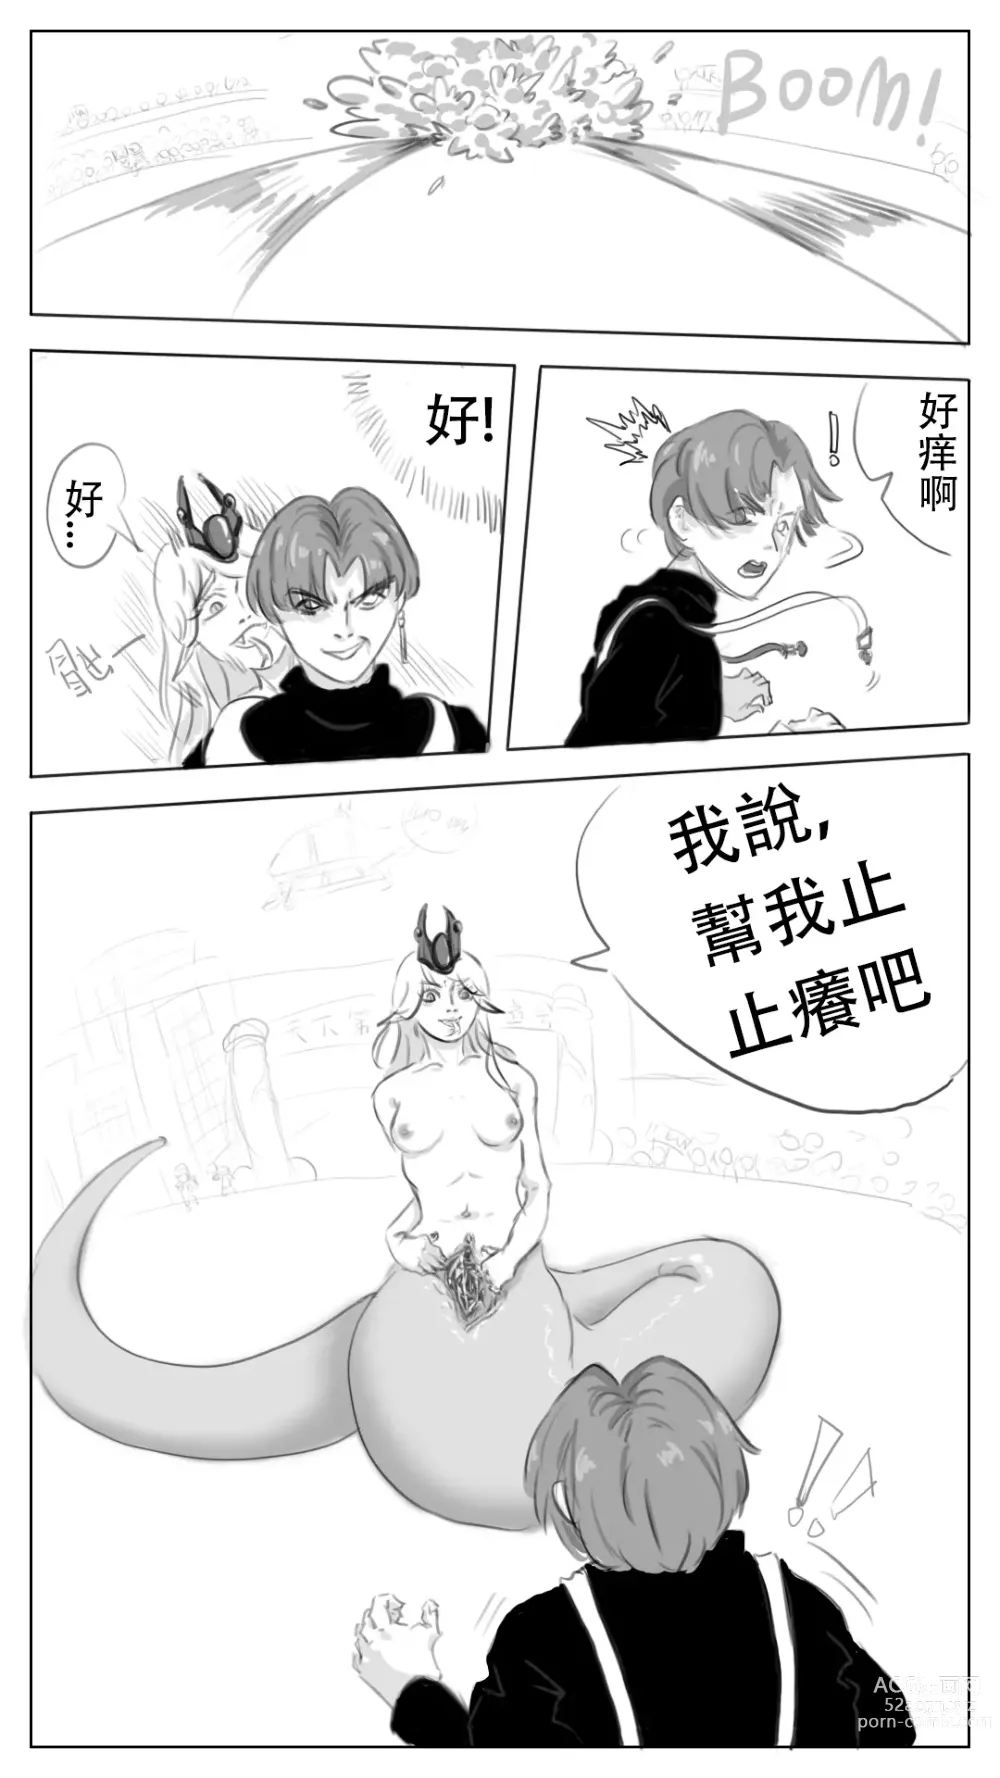 Page 4 of doujinshi 采徐坤大战赖皮蛇